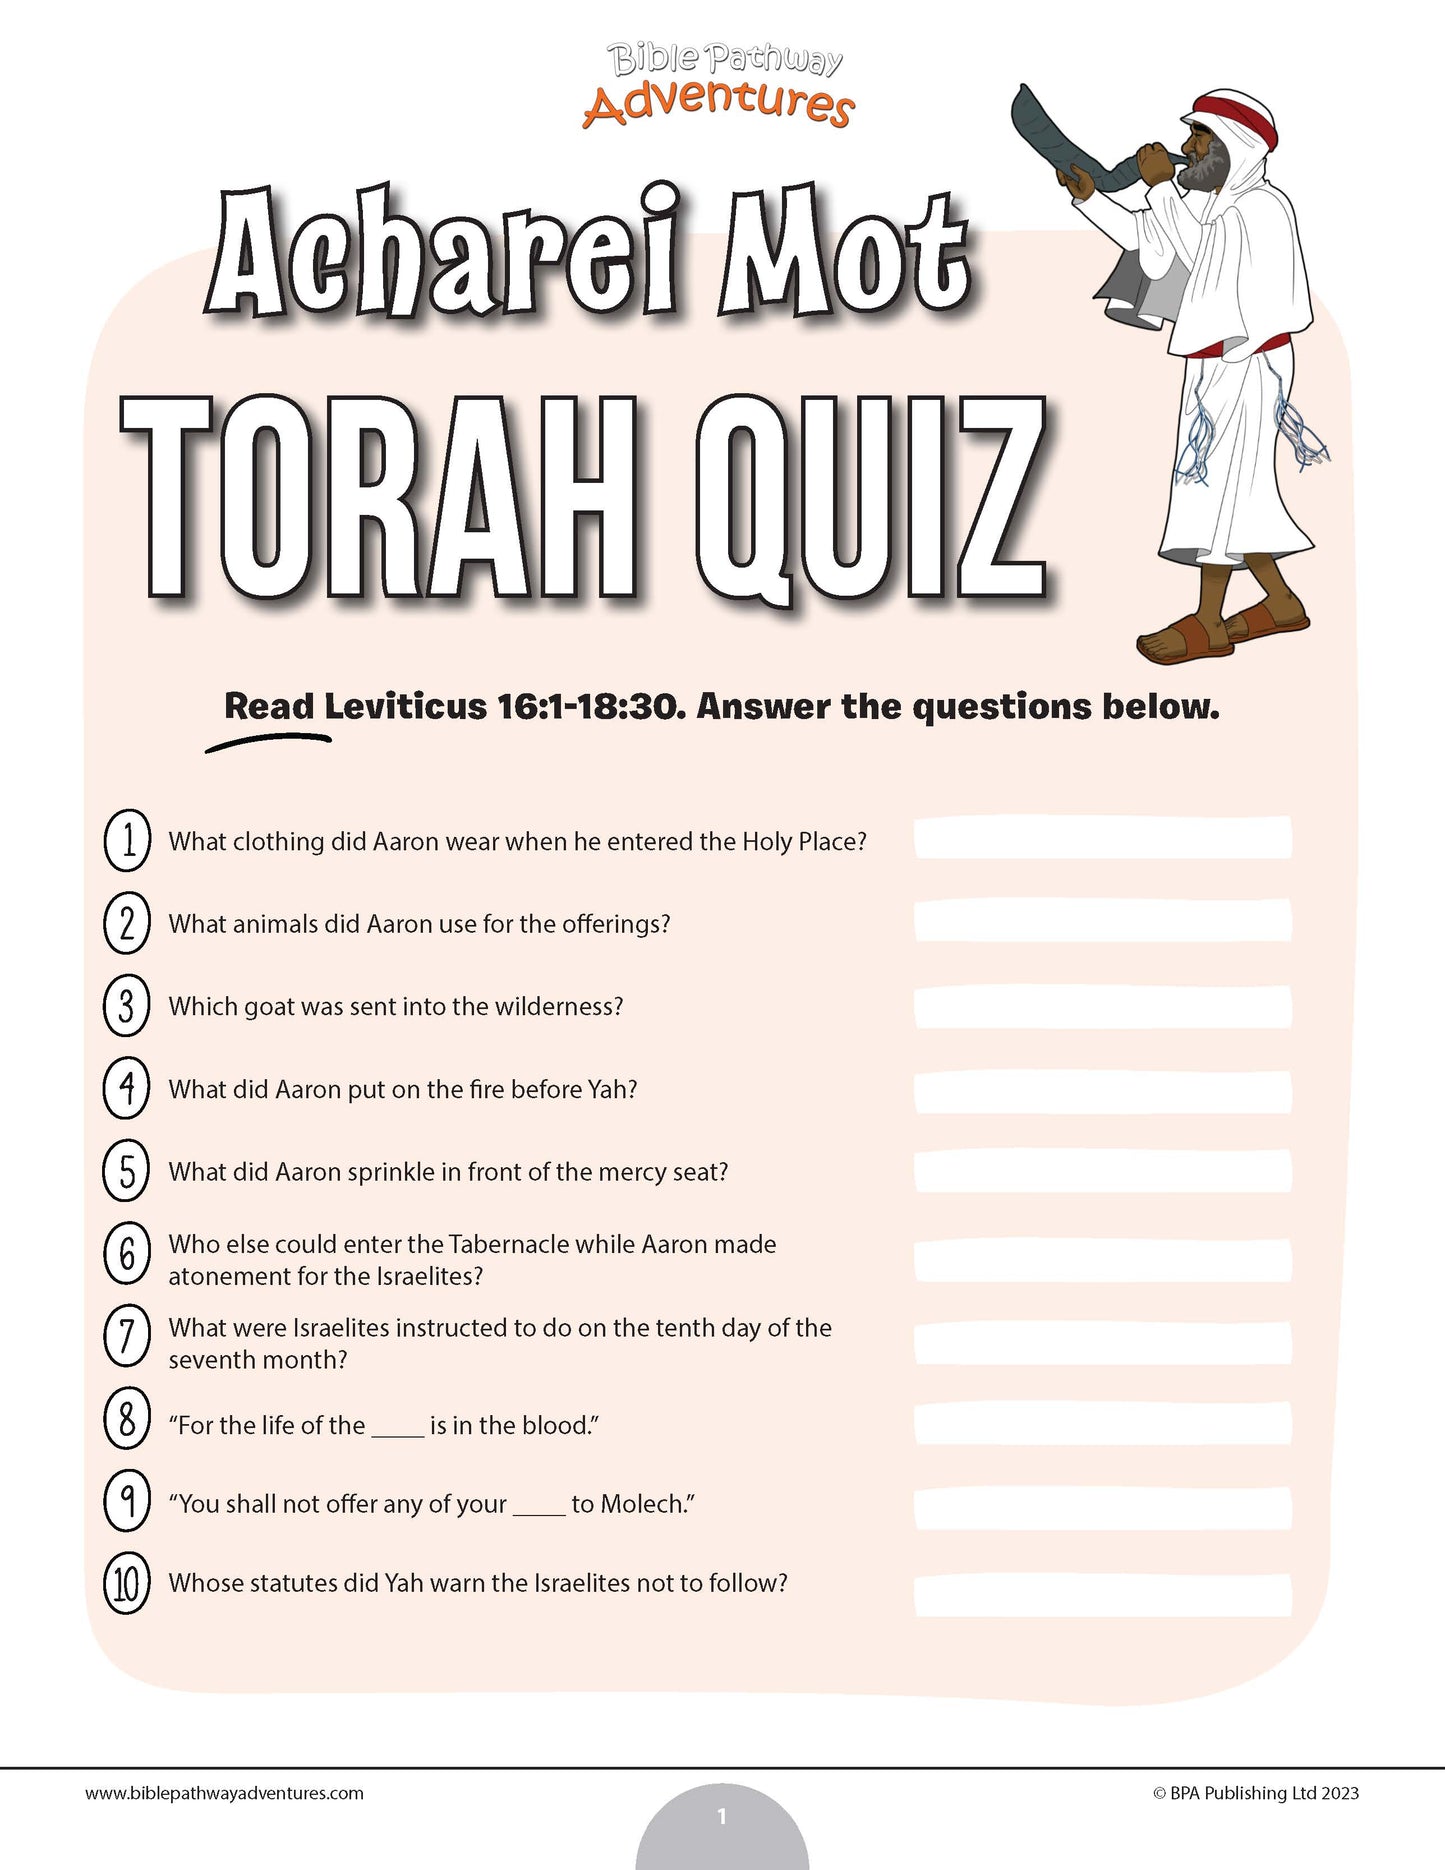 Acharei Mot Torah quiz